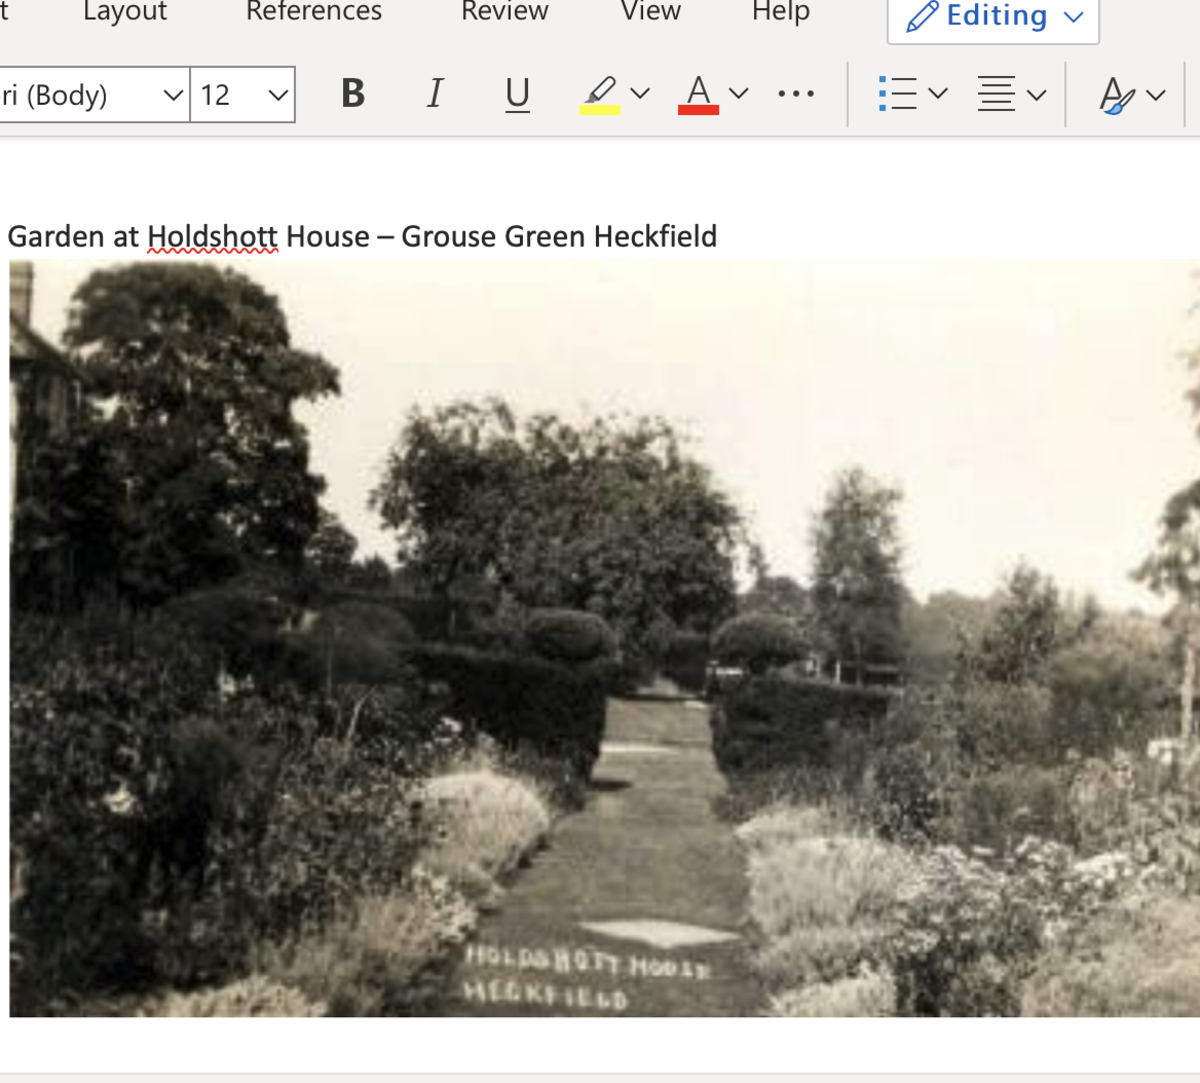 Holdshot House Garden